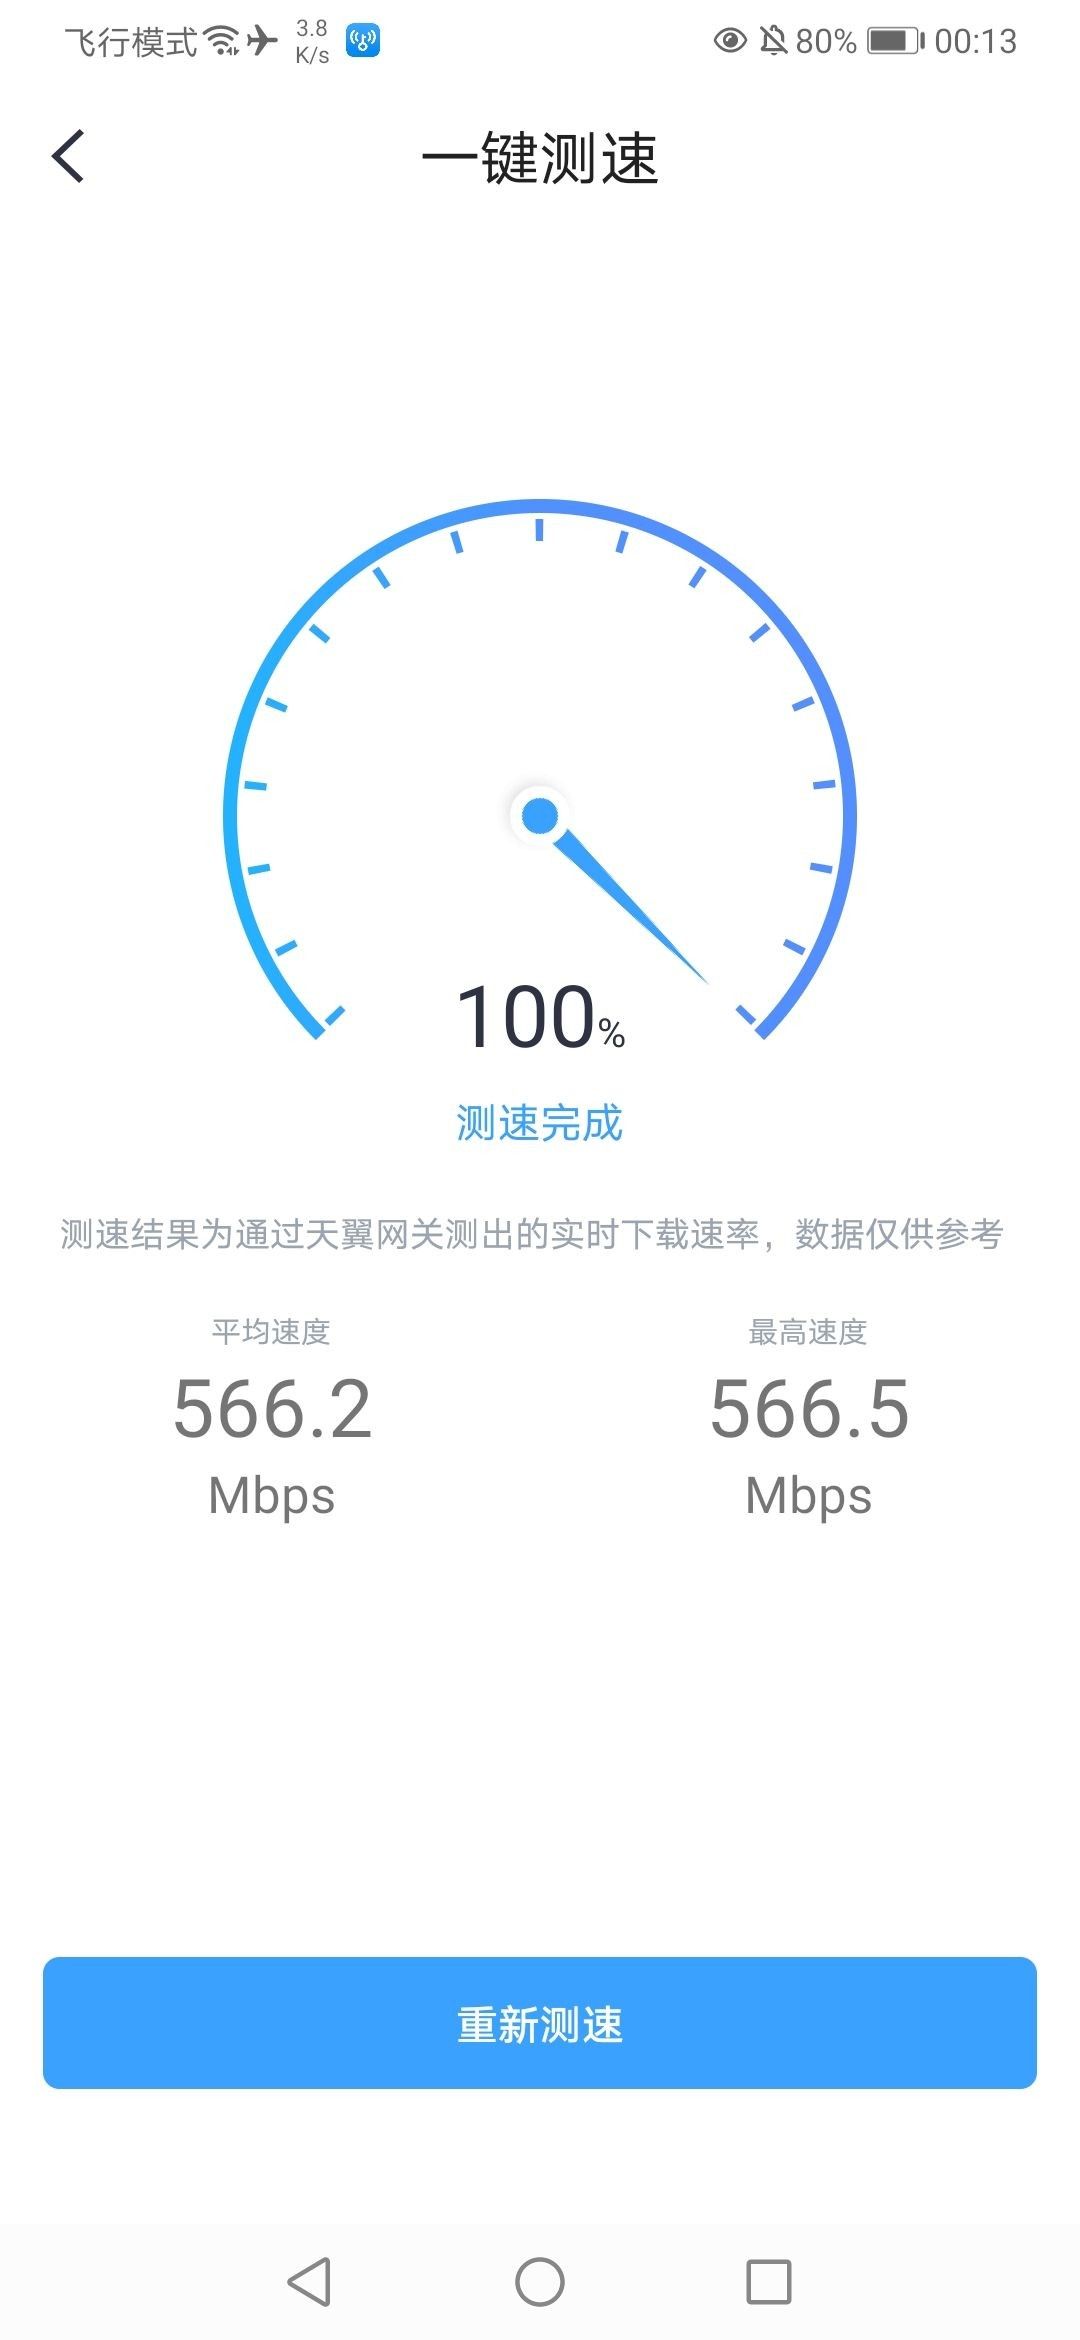 500m网络测速结果差不多电信网络还是不错的